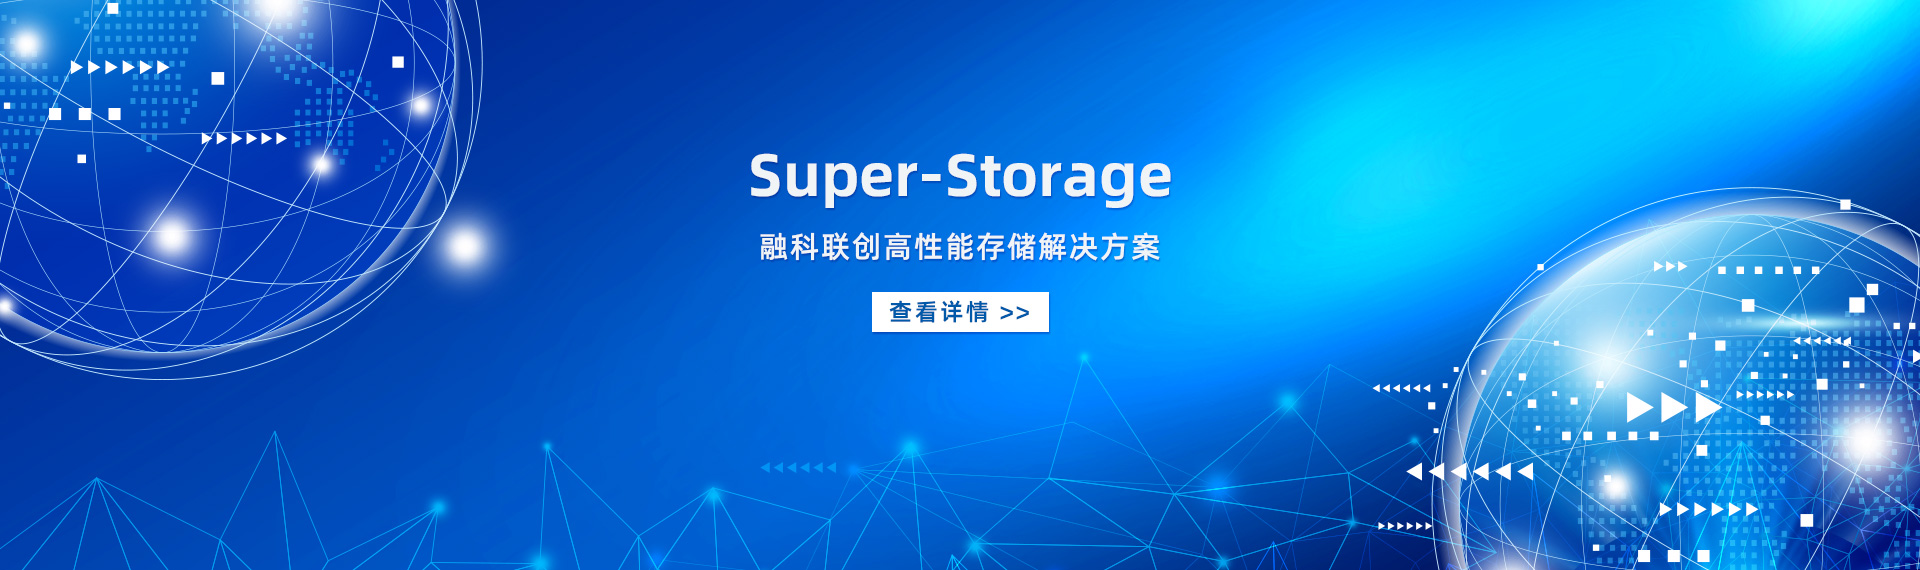 Super-Storage 融科联创高性能存储解决方案